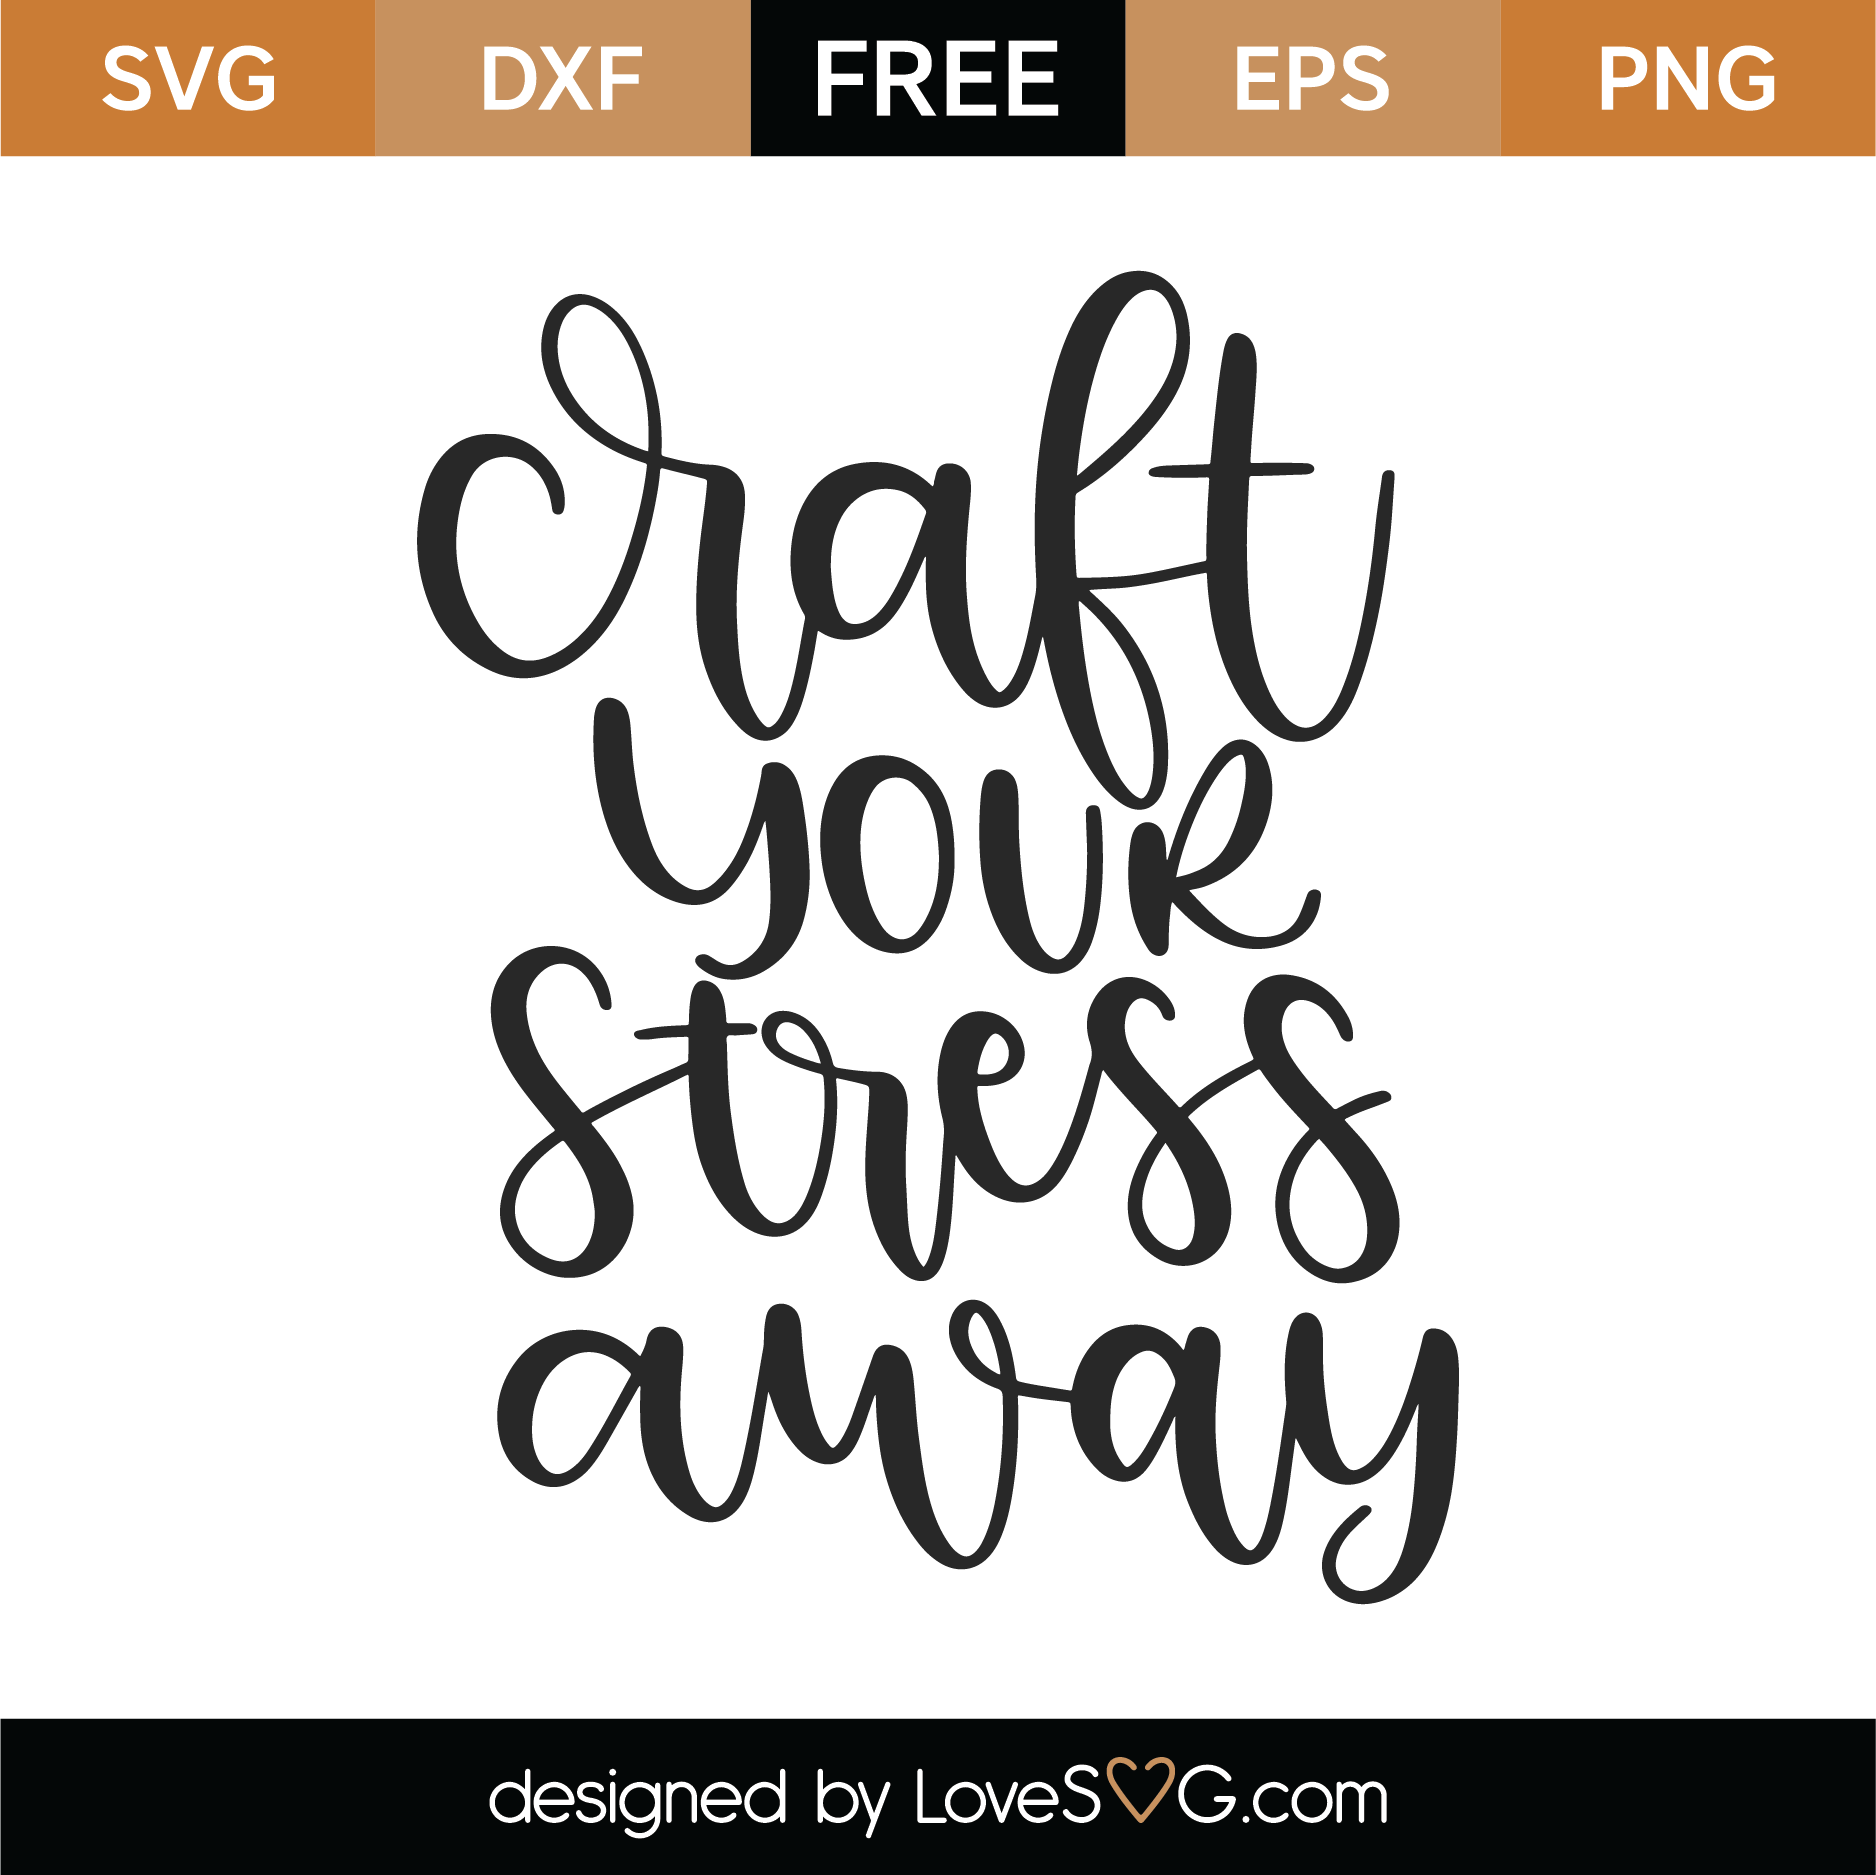 Download Free Craft Your Stress Away SVG Cut File | Lovesvg.com